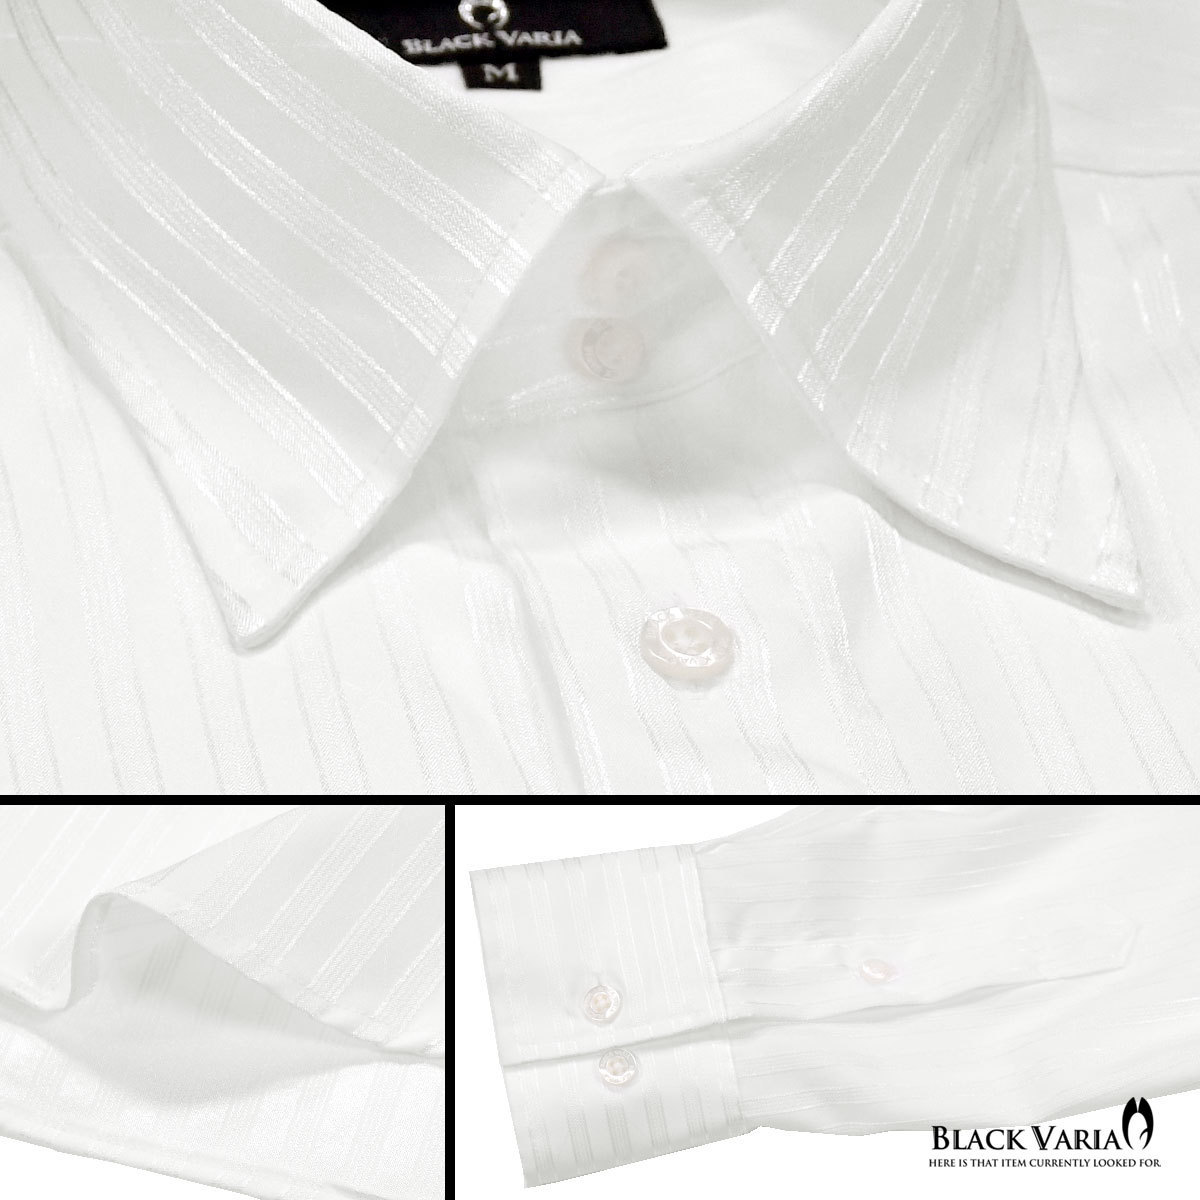 a191850-wh BLACK VARIA ドゥエボットーニ ストライプ柄 ジャガード織柄[レギュラーカラー]サテンシャツ メンズ(ホワイト白) M きれいめ_画像5